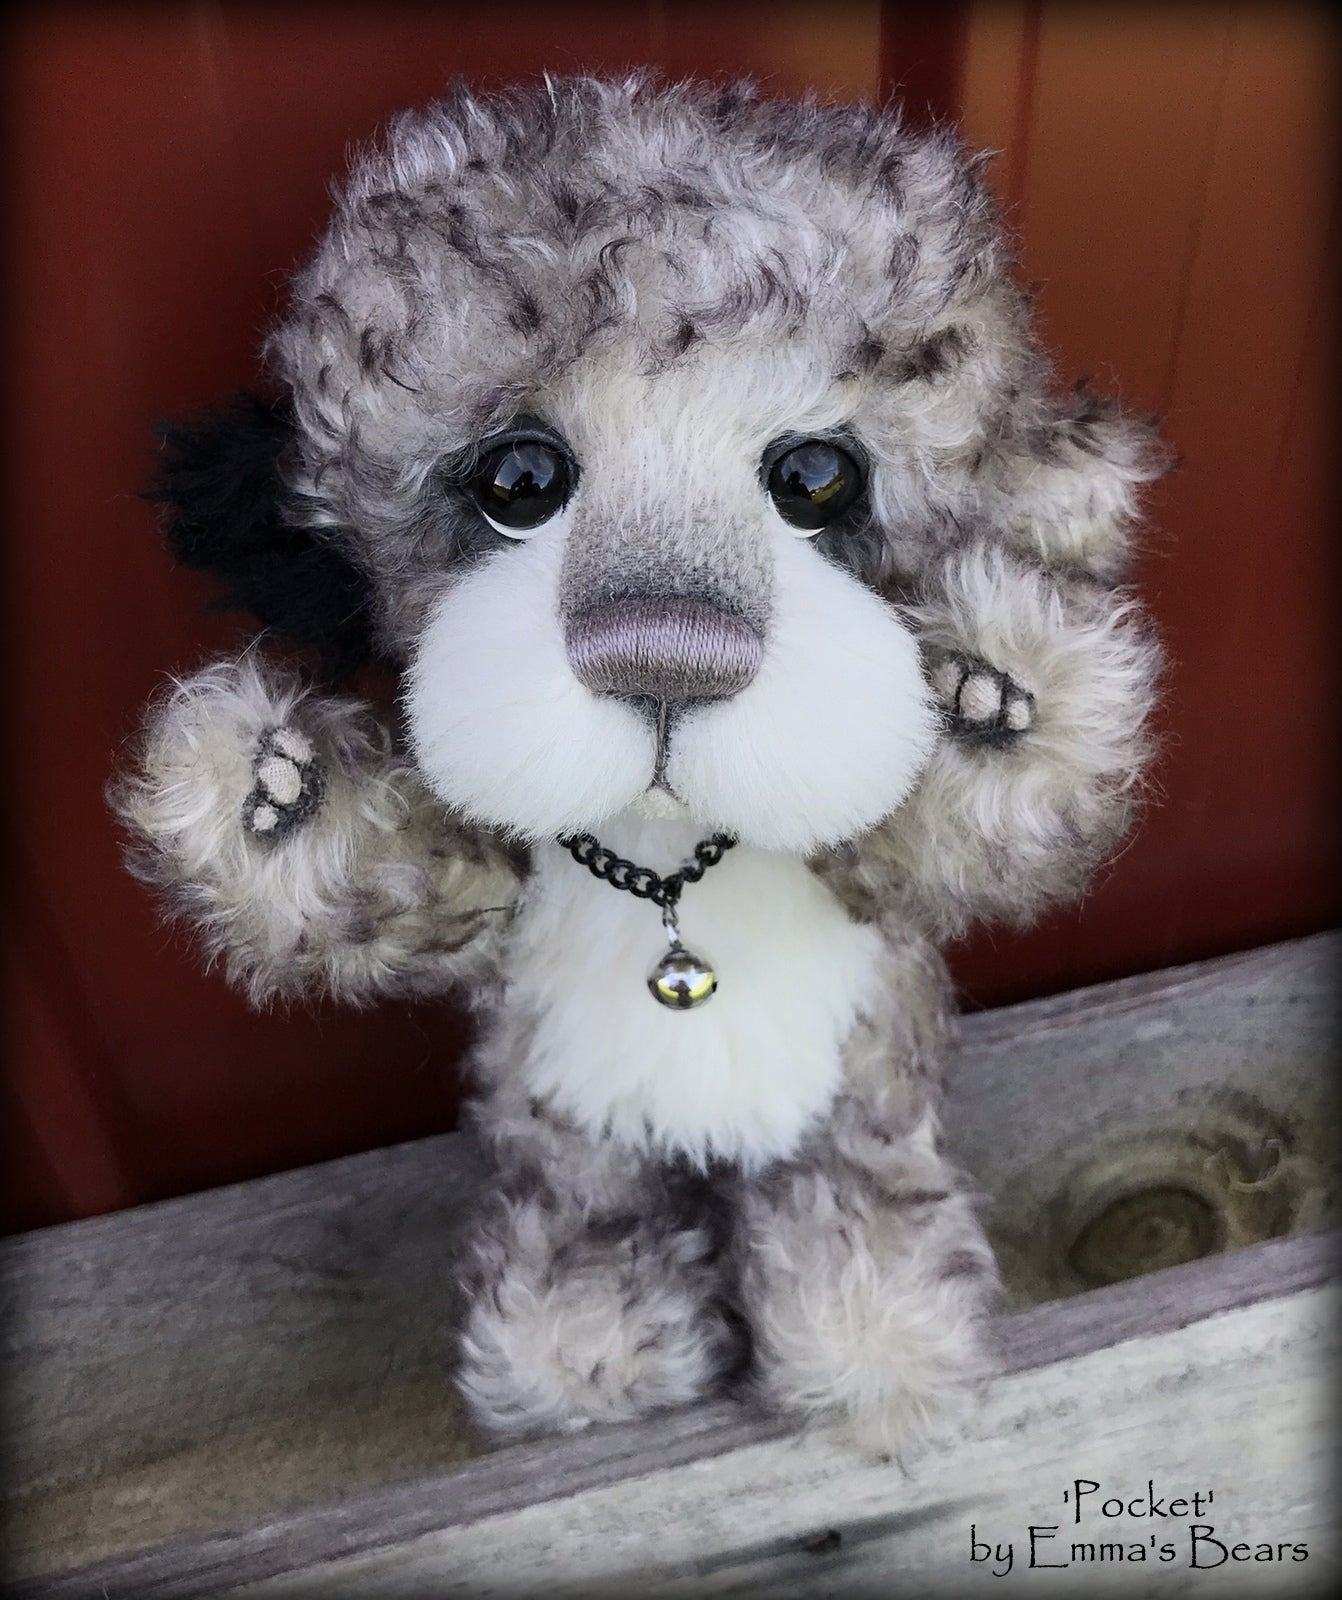 Pocket - 9" Mohair and alpaca artist bear by Emma's Bears - OOAK